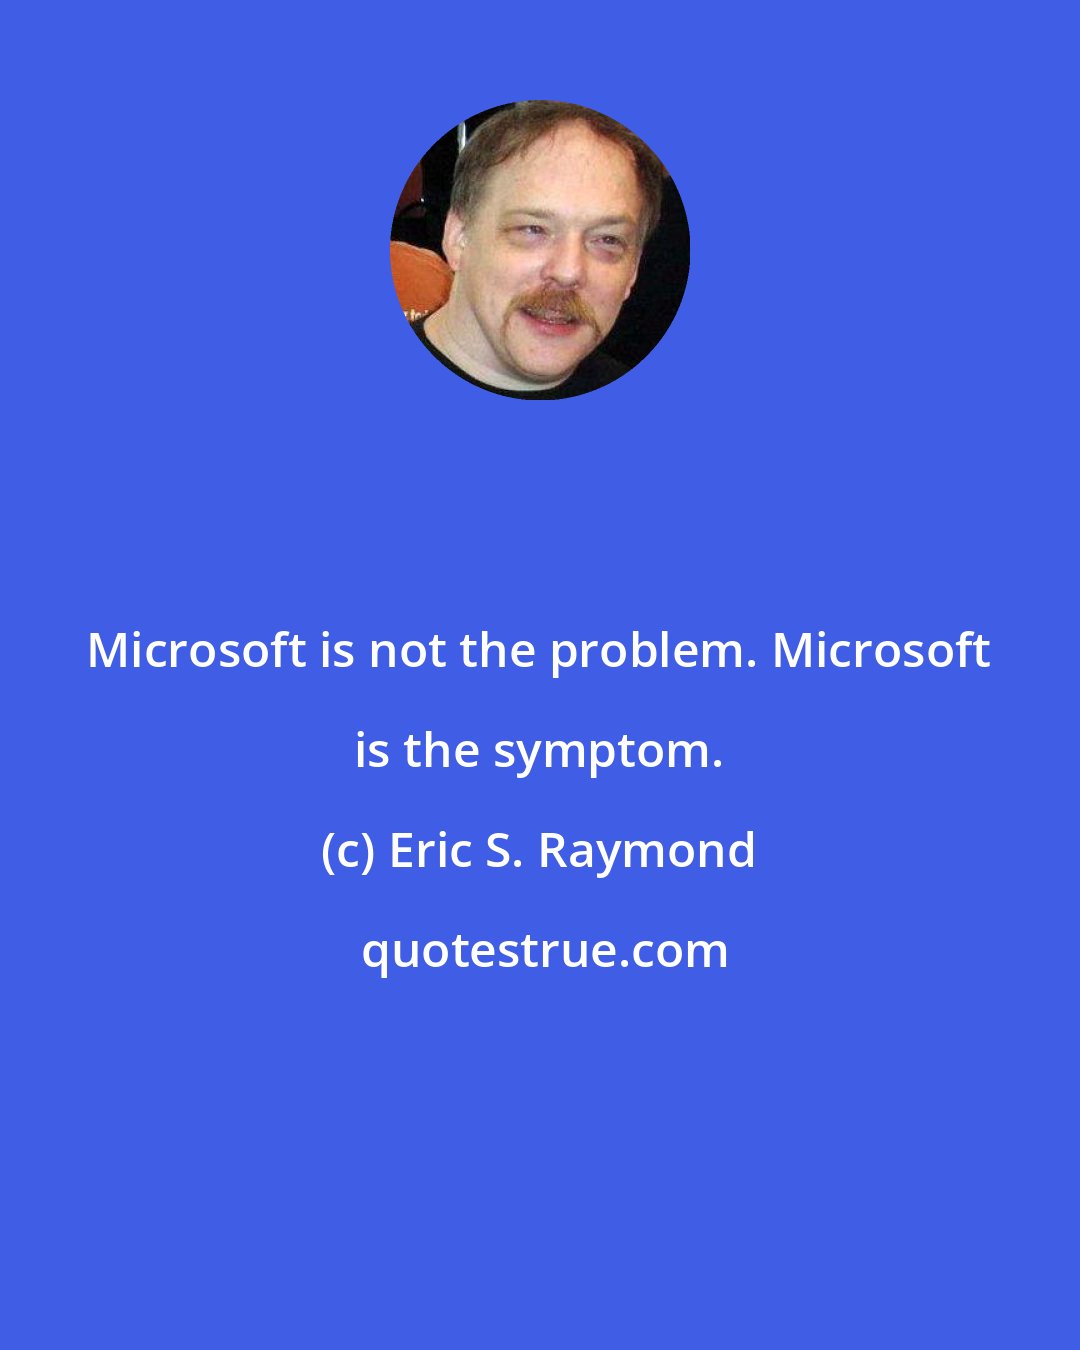 Eric S. Raymond: Microsoft is not the problem. Microsoft is the symptom.